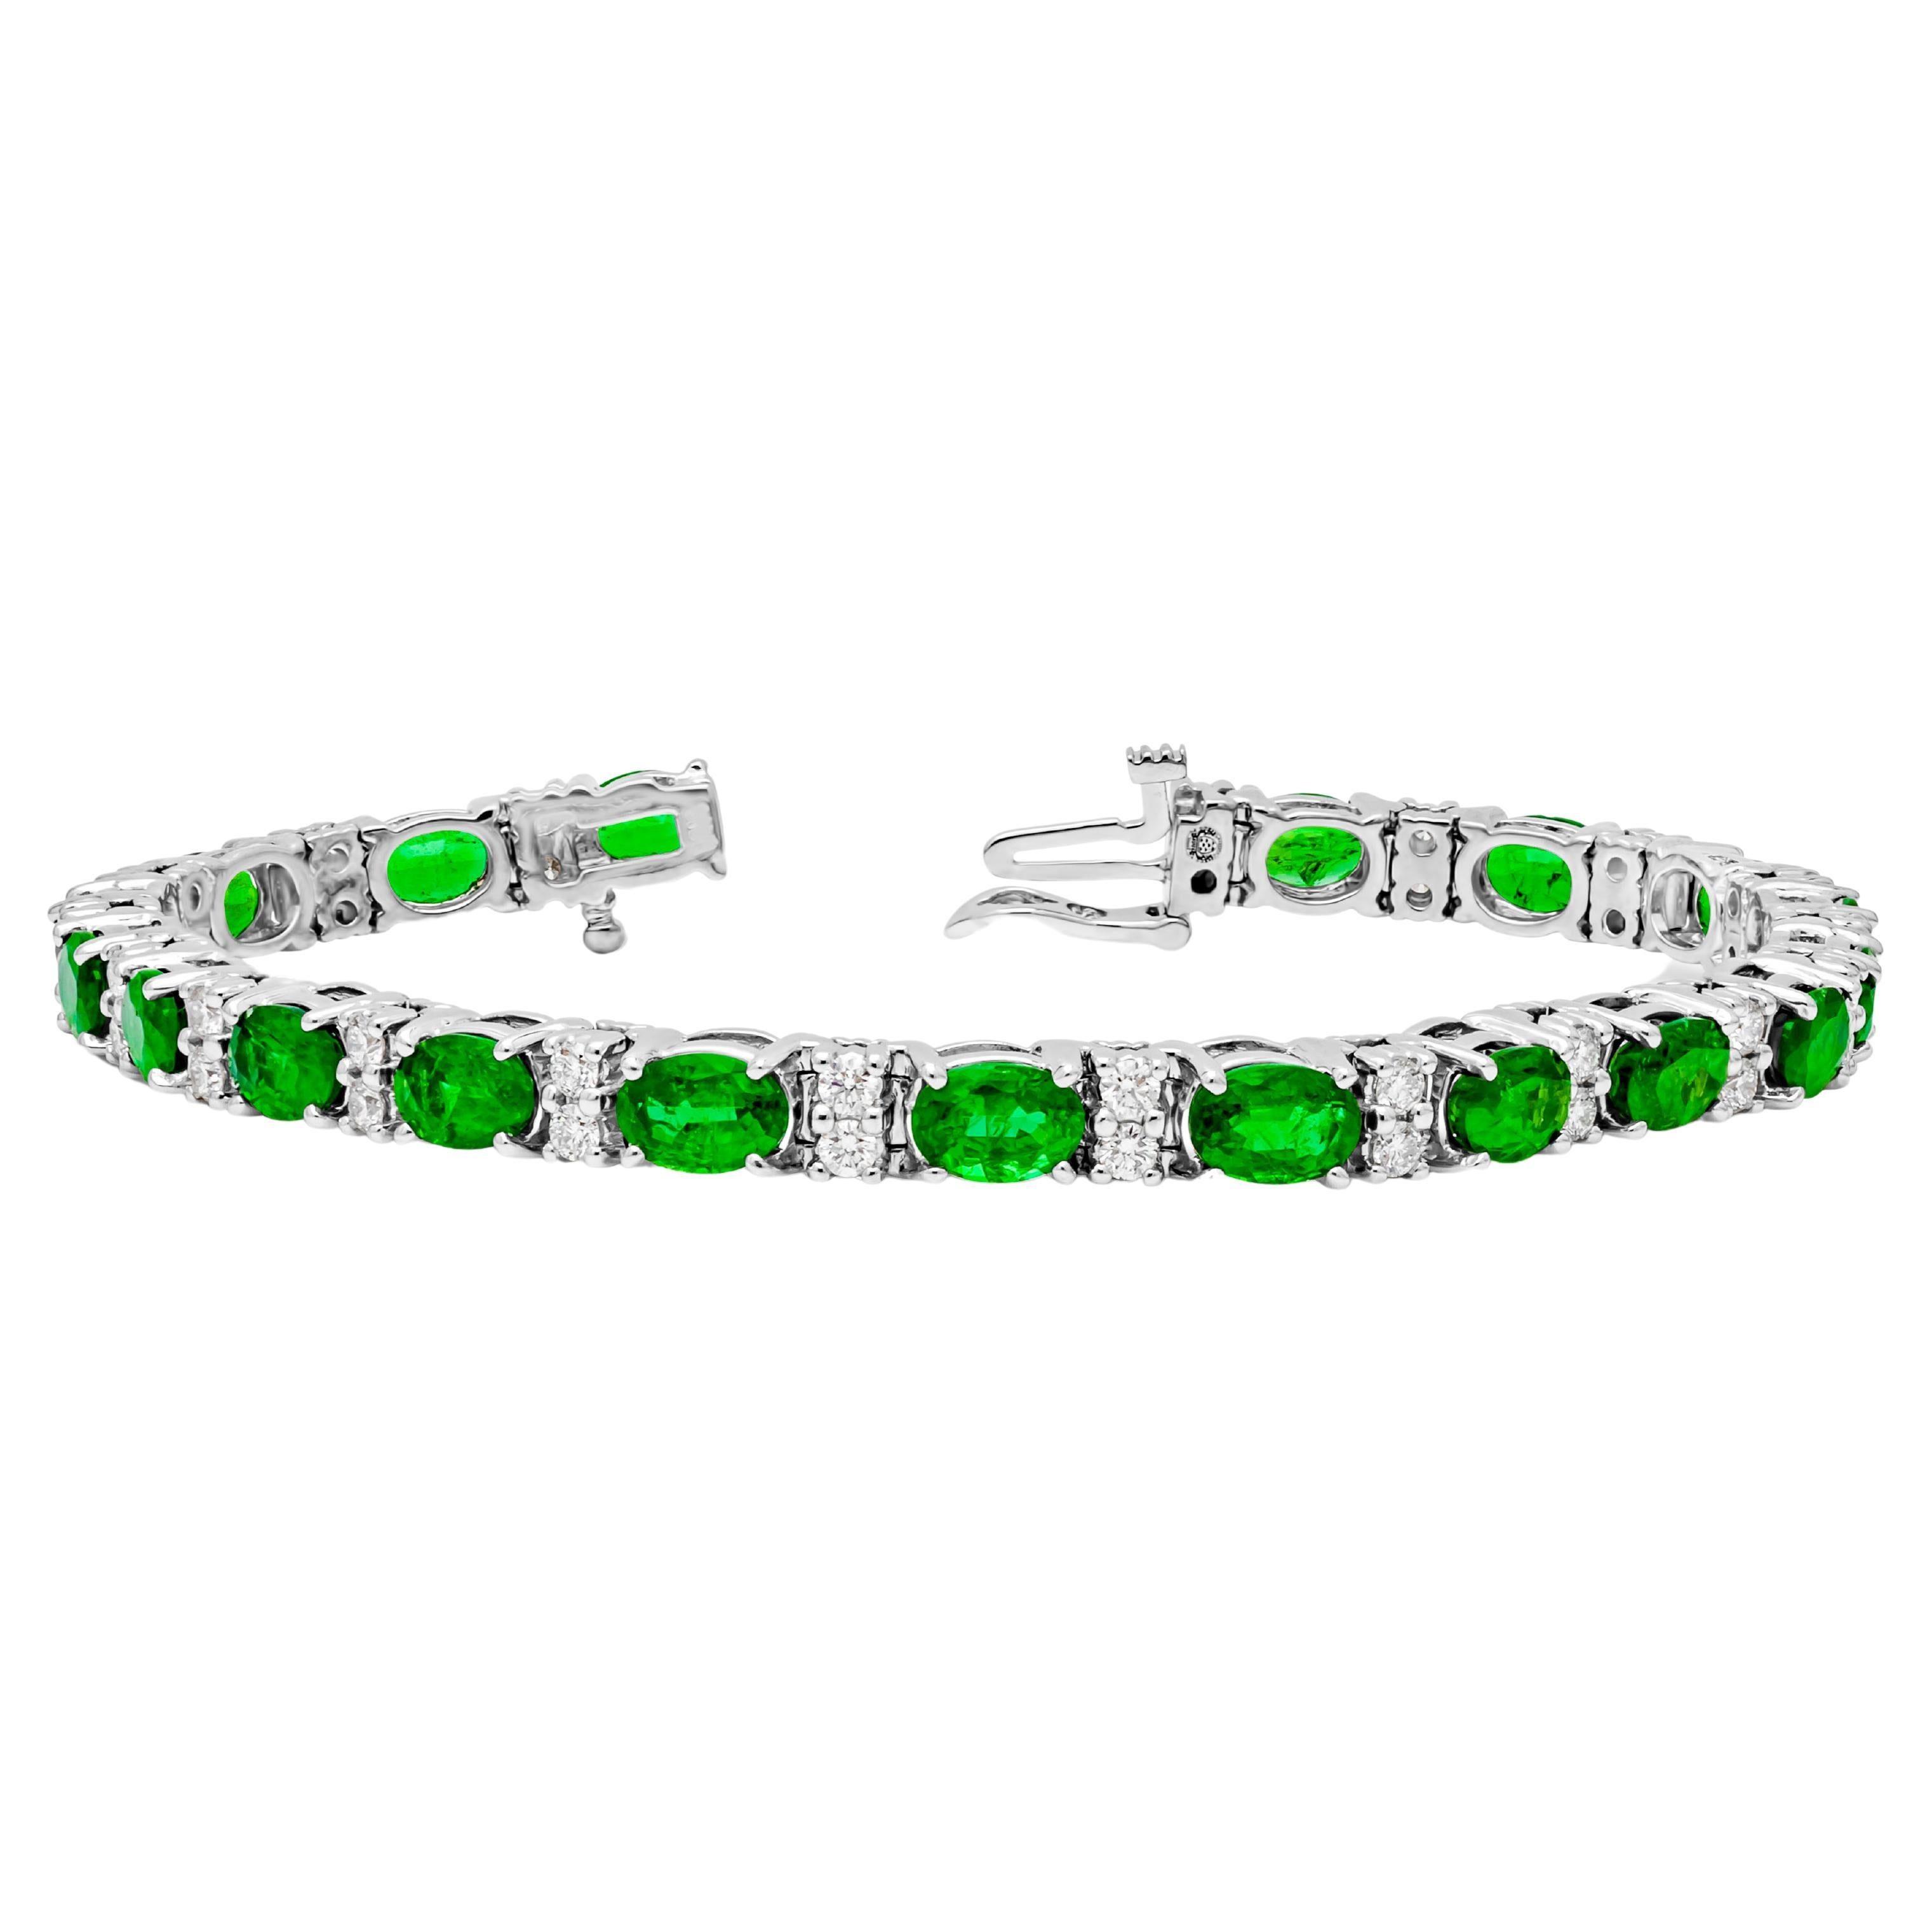 Roman Malakov 8.48 Carats Total Oval Cut Emerald with Diamond Tennis Bracelet